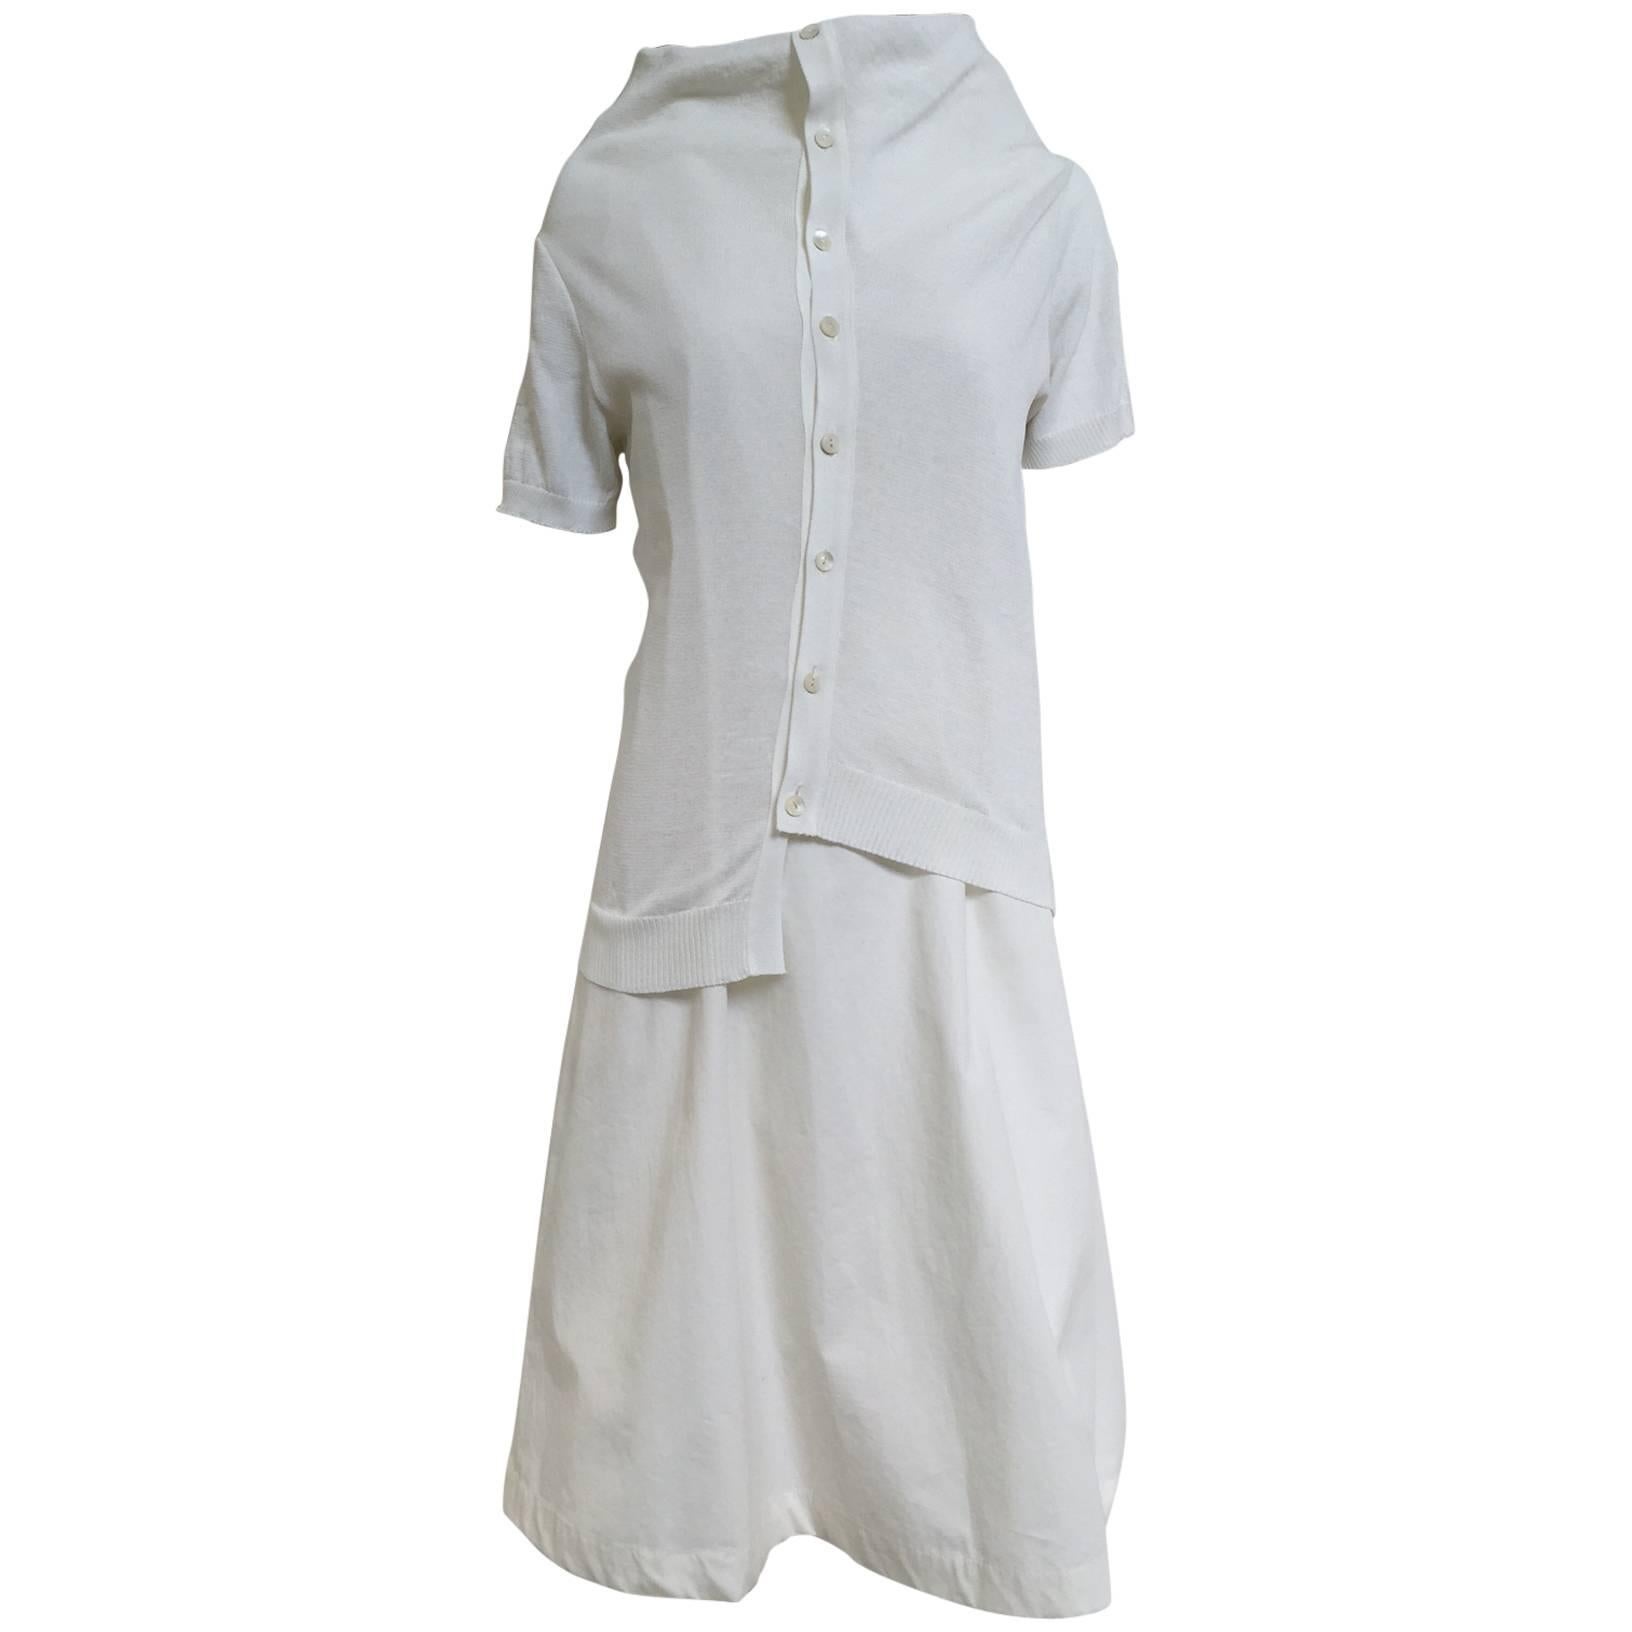 90s Comme des garcons white cotton and knit dress